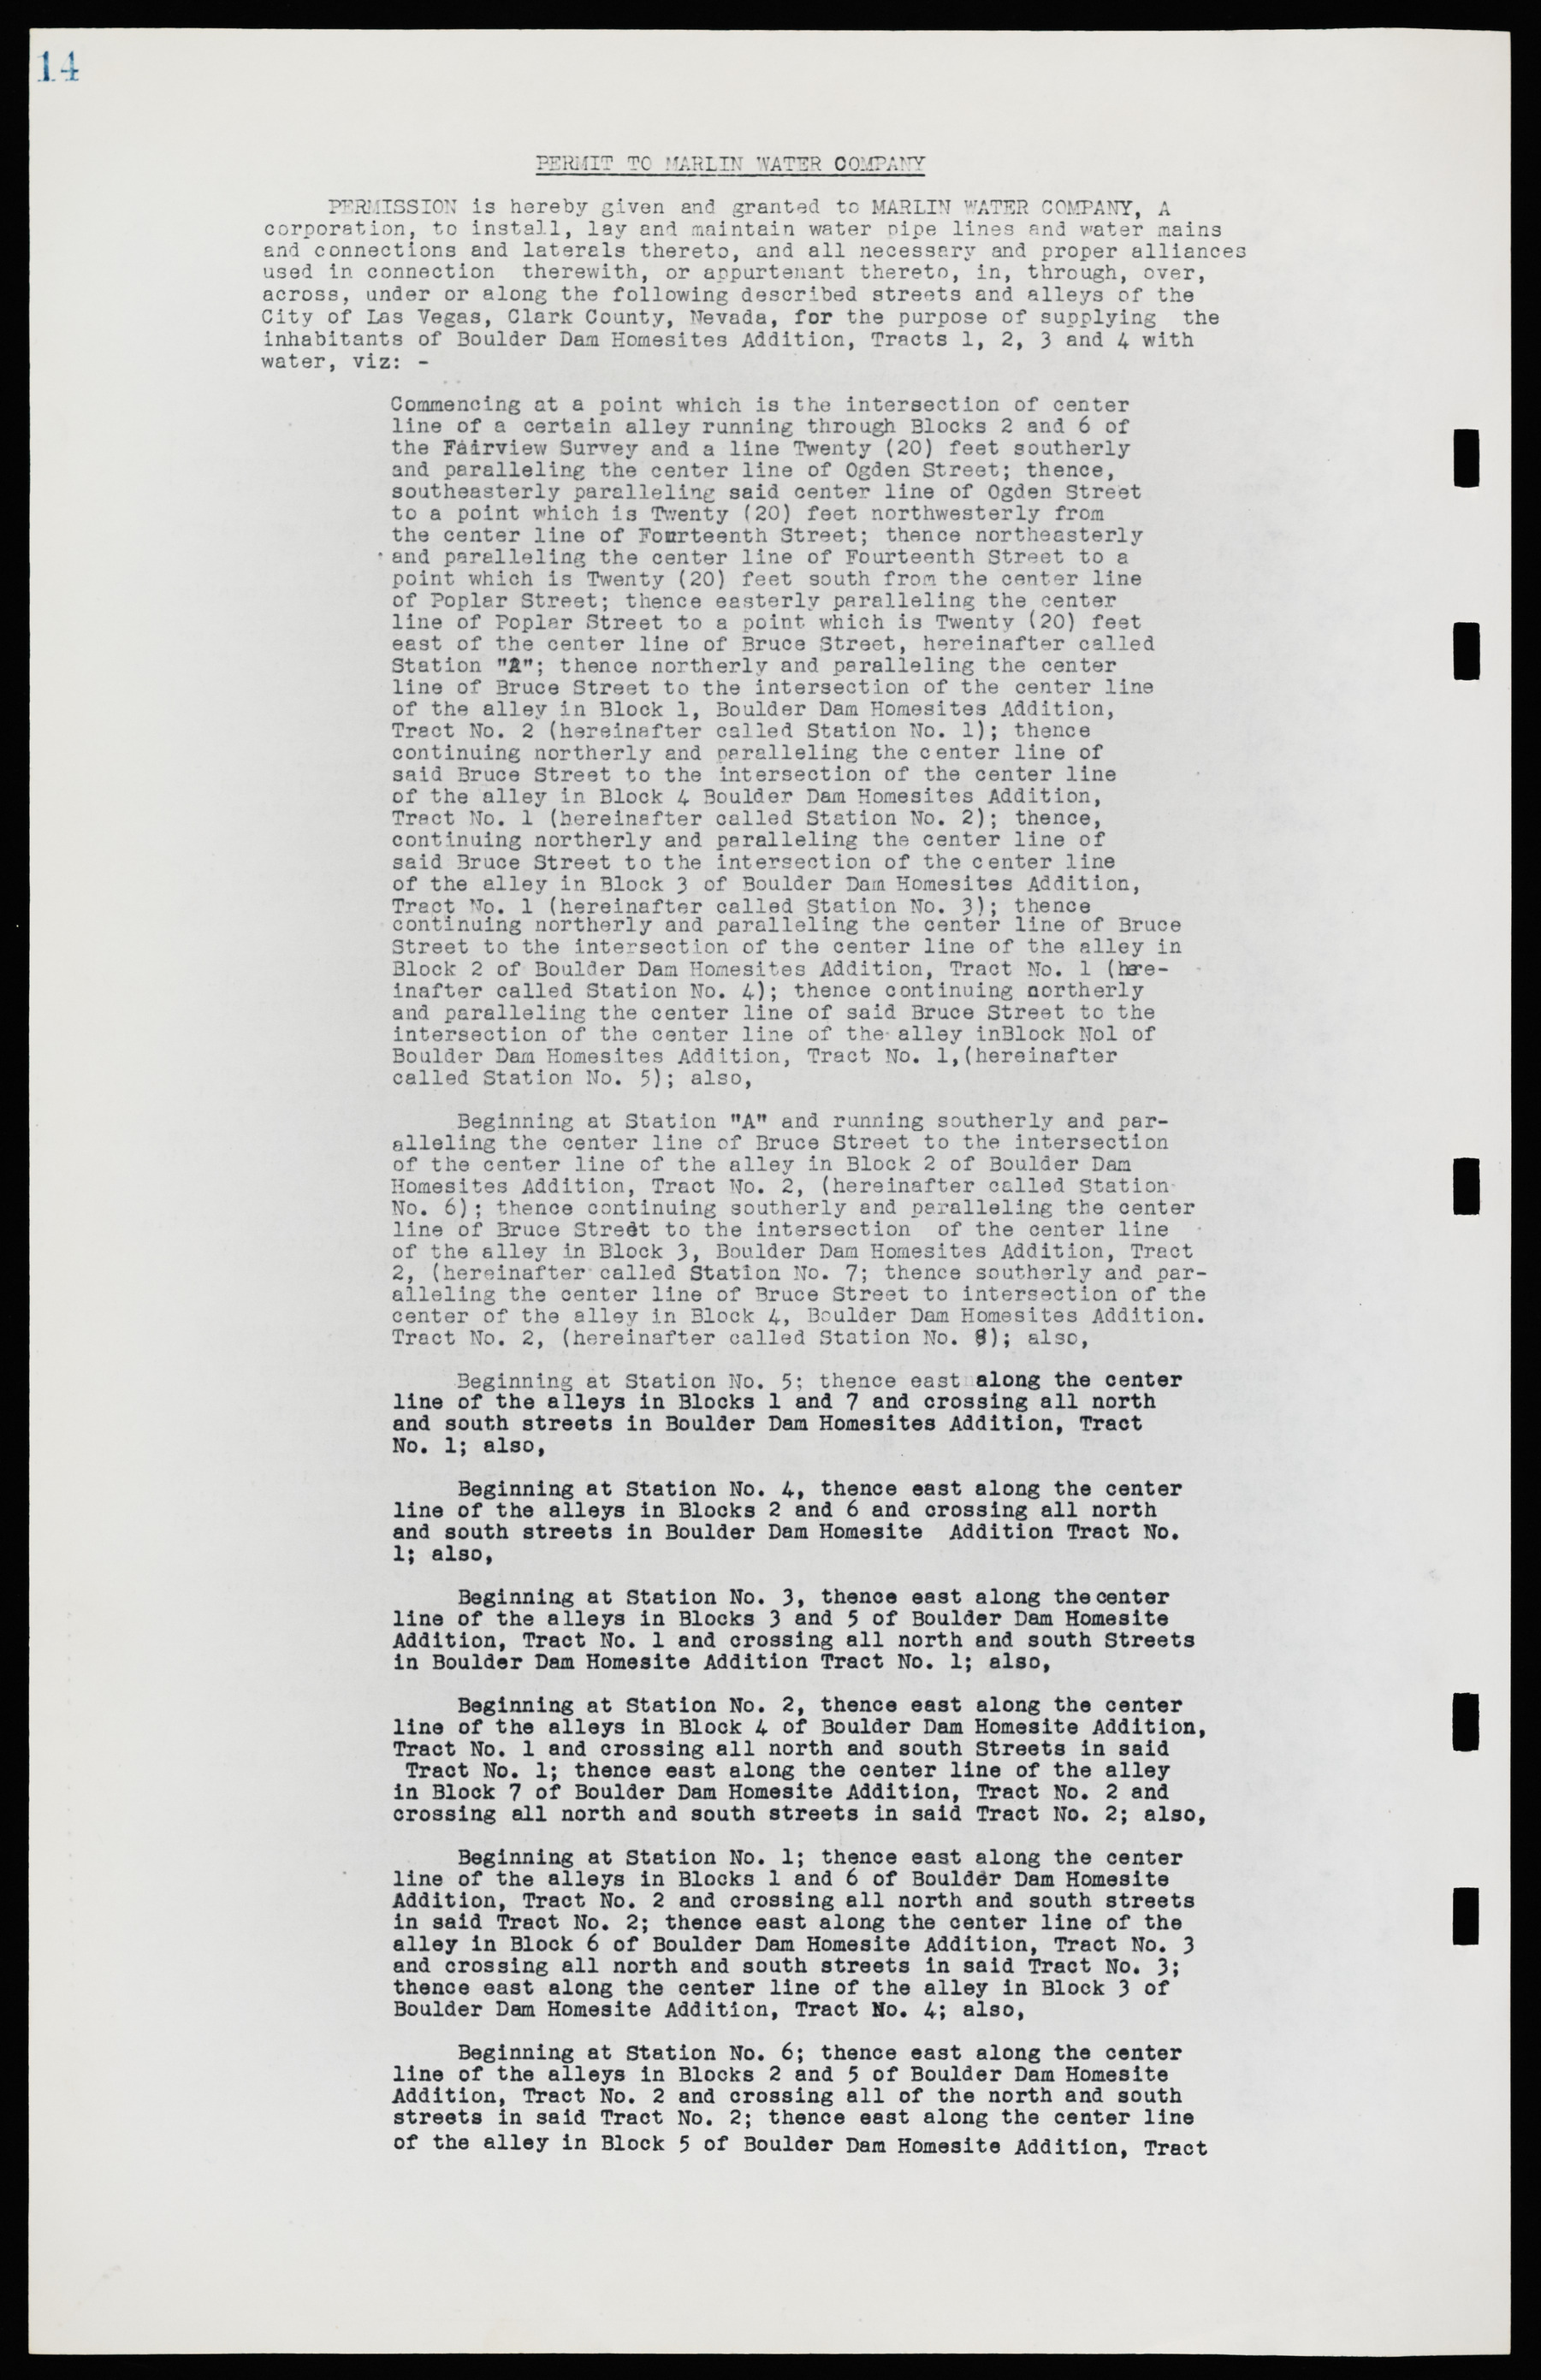 Las Vegas City Commission Legal Documents, February 29, 1944 to February 21, 1945, lvc000016-22